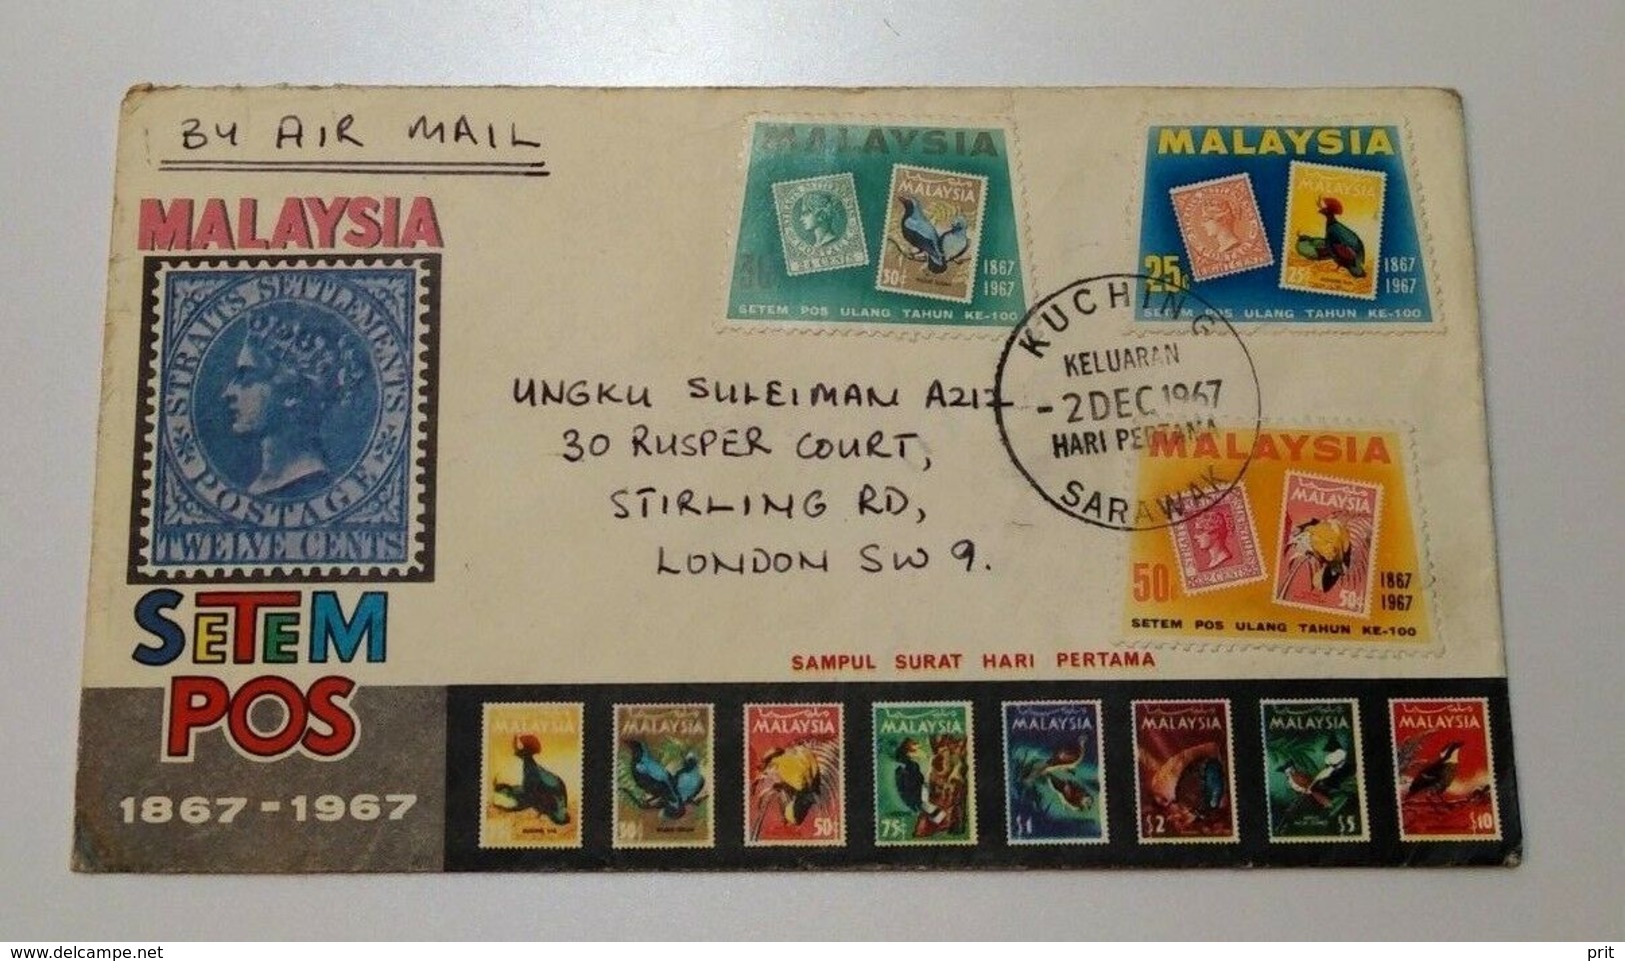 Kuching, Sarawak, Malaysia 1967 Nice Posted First Day Cover To London, Clear Kuching Sarawak Postmark. - Malaysia (1964-...)